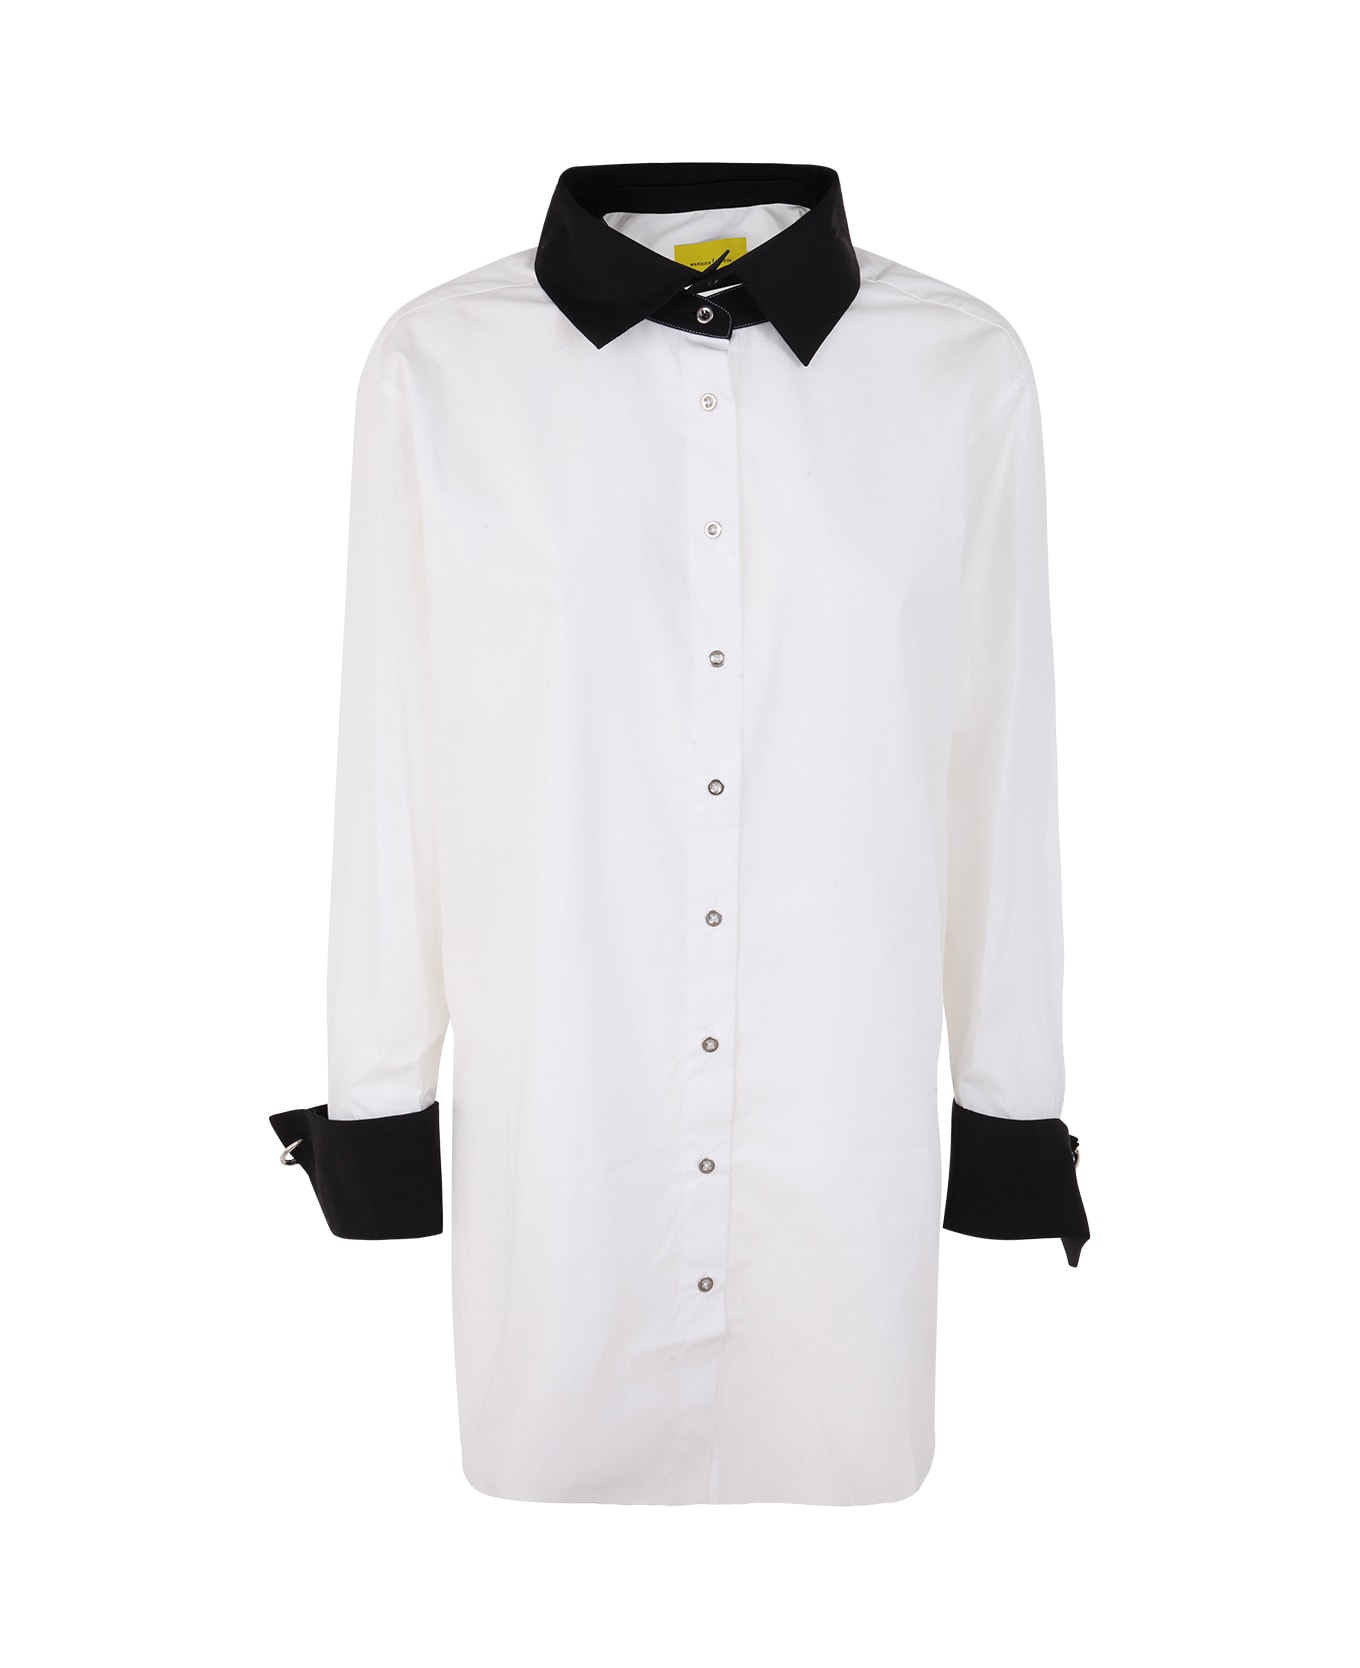 Marques'Almeida Shirt With Detachable Cuffs And Collar - Black/white